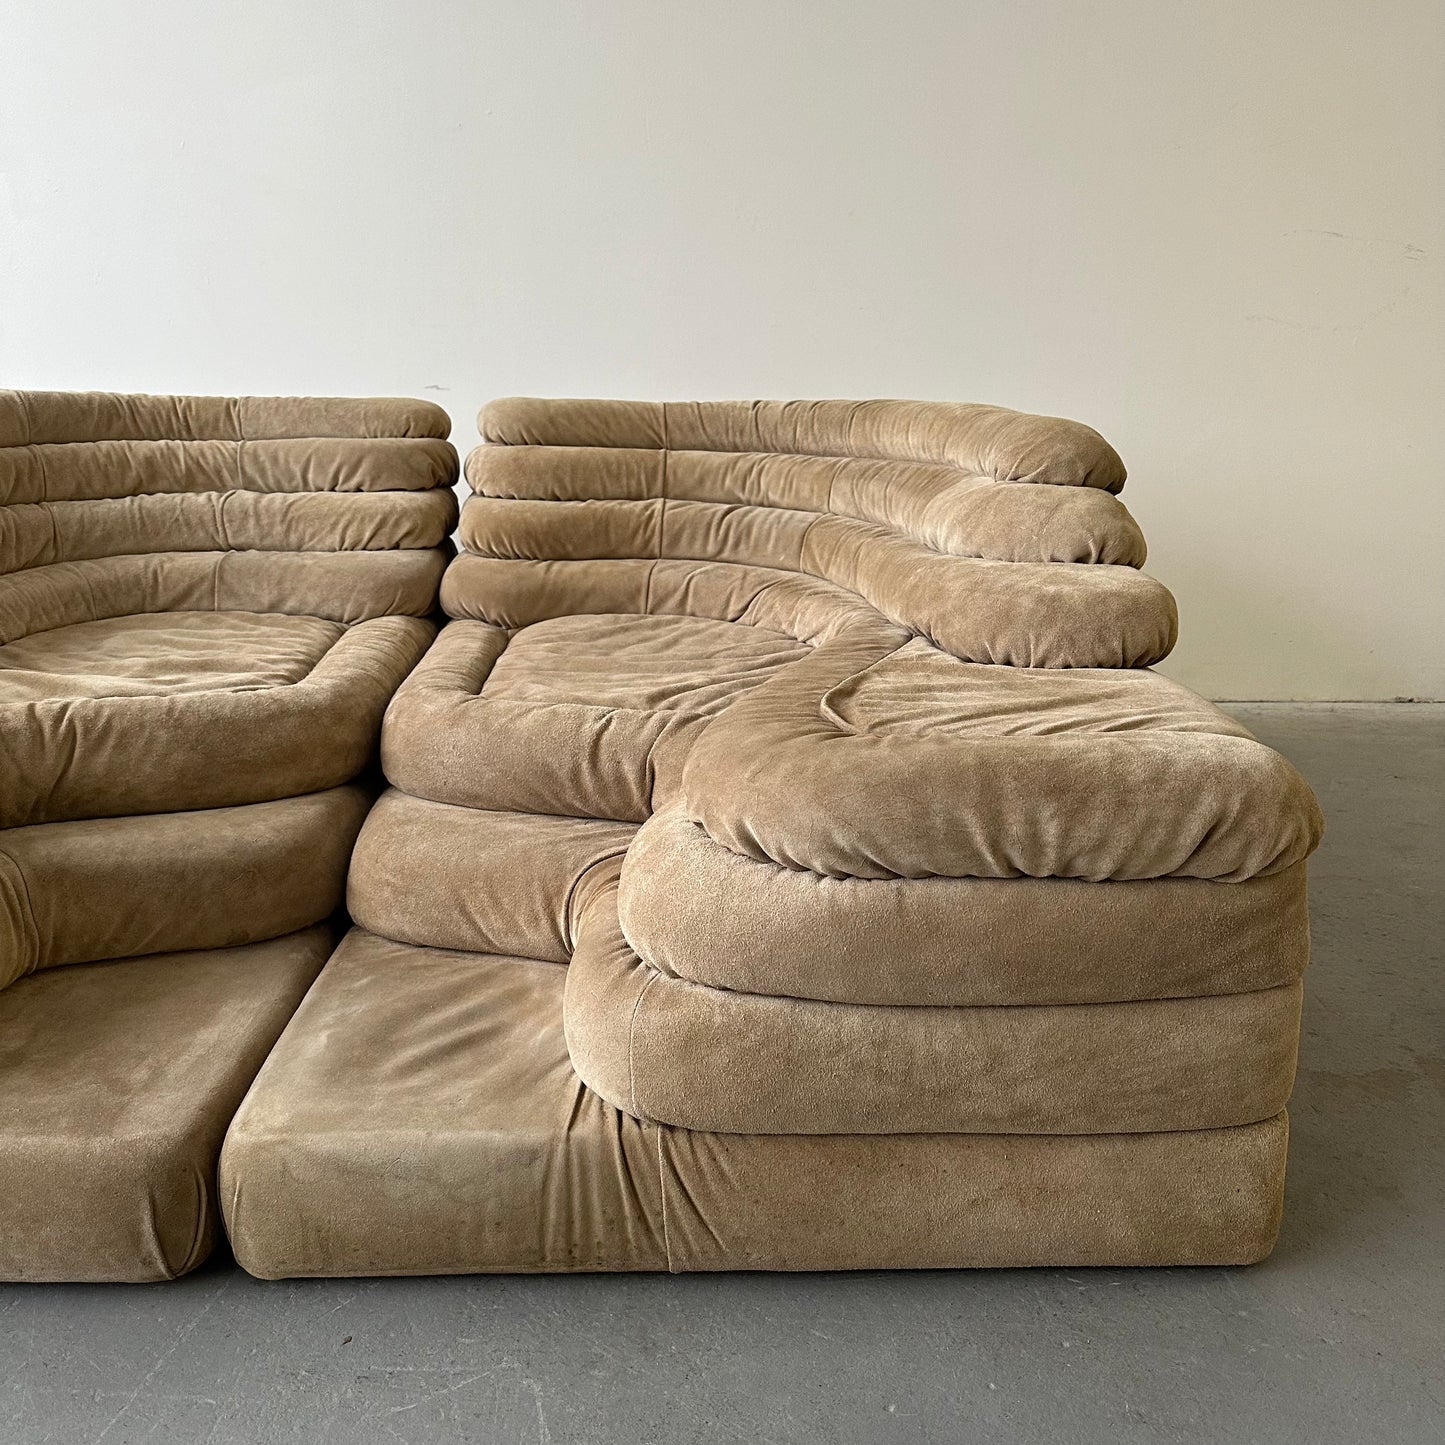 De Sede Terrazza Sofas by Ubald Klug, a pair